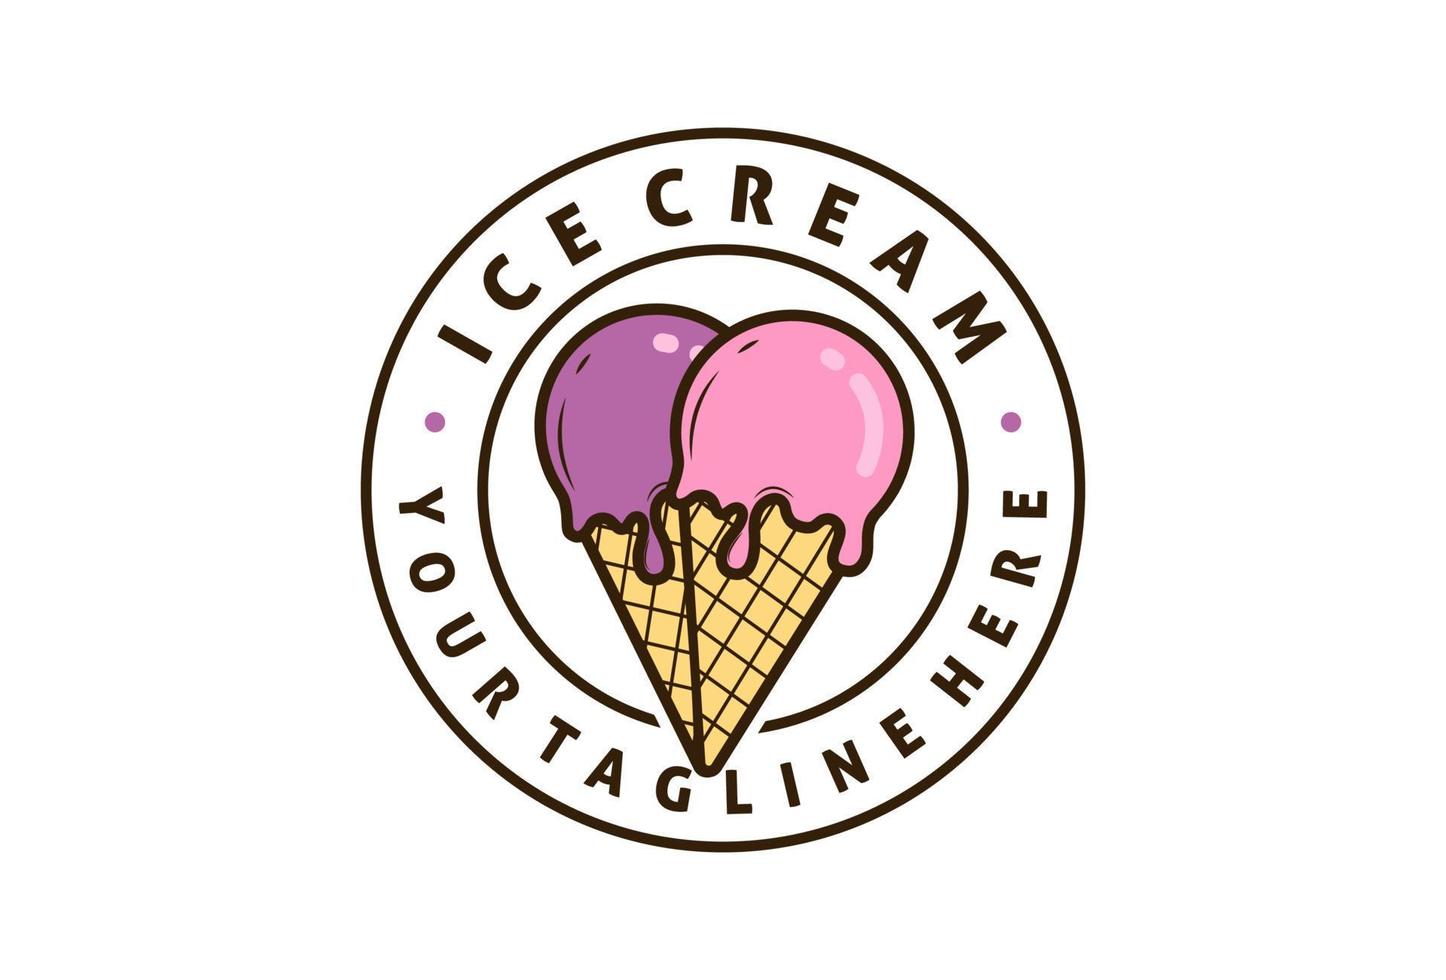 Ice cream logo design with scoops and waffle cone. Italian ice cream emblem illustration vector